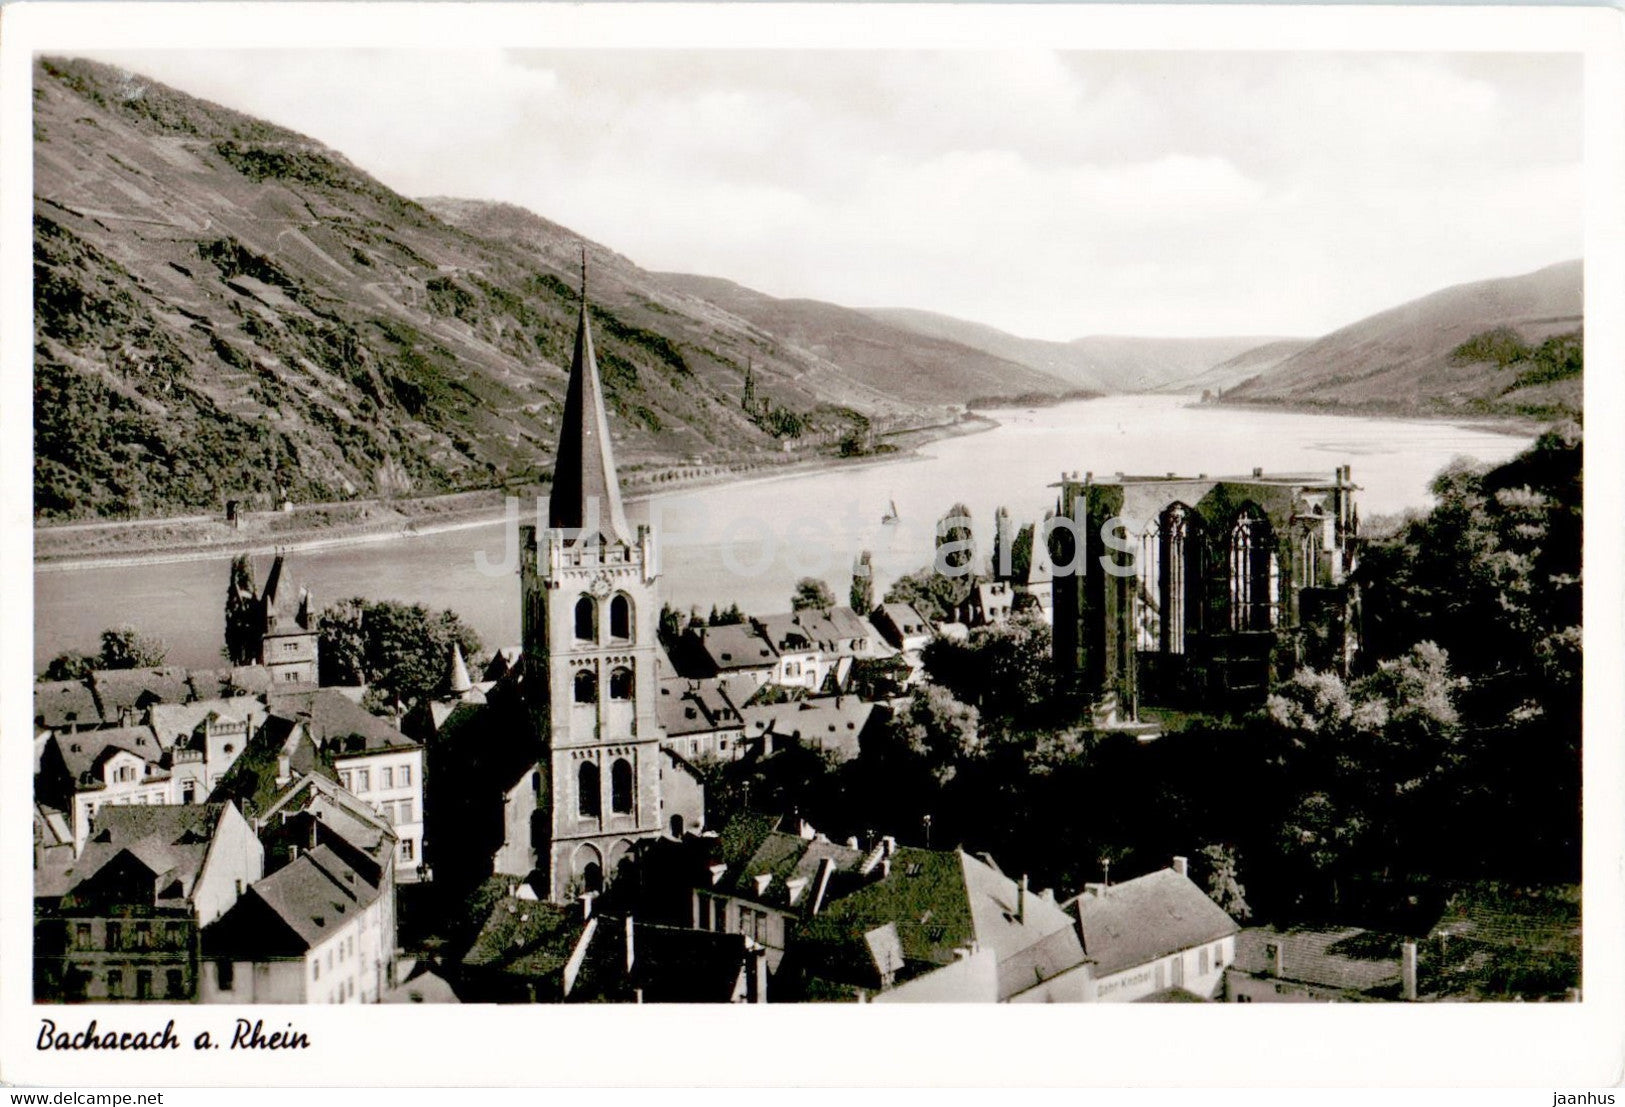 Bacharach a Rhein - old postcard - Germany - unused - JH Postcards